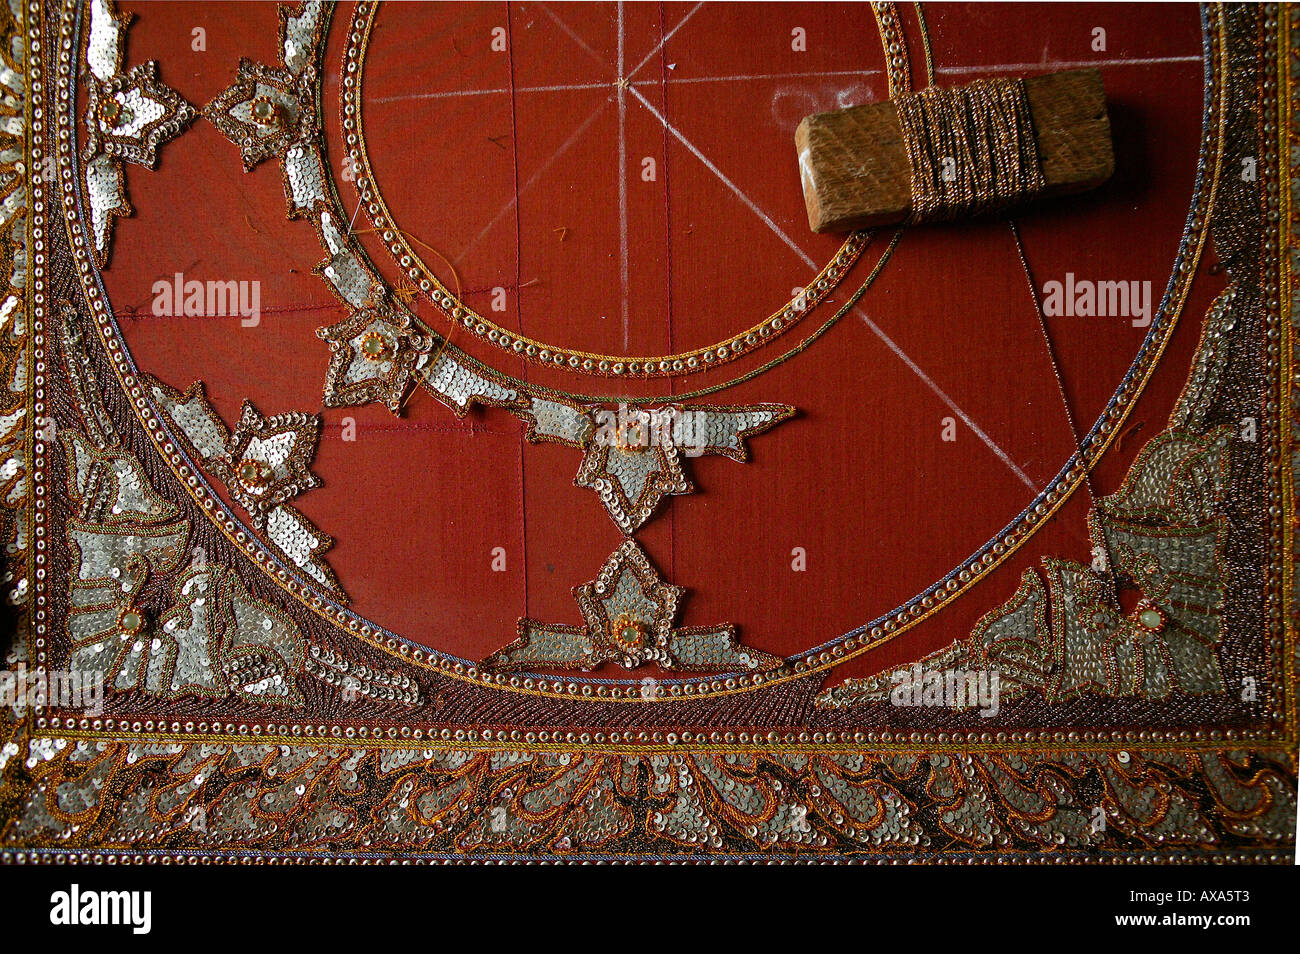 Detail of an embroidery work, Nahaufnahme, Stickerei, Tapisserie, Feinarbeit an einem Wandteppich Stock Photo